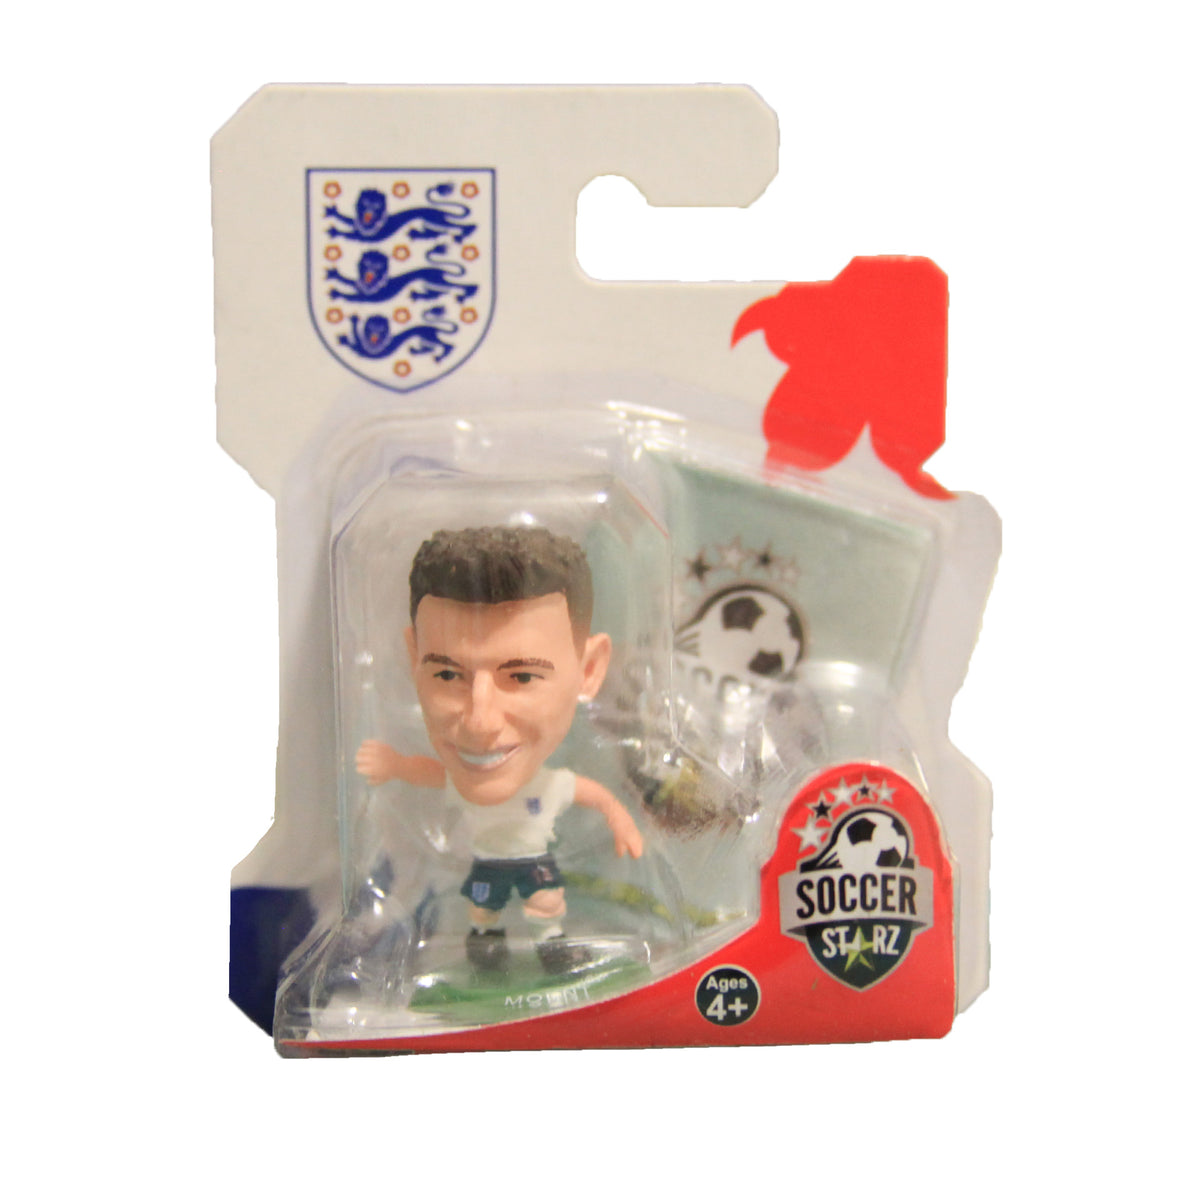 England FA Bukayo Saka SoccerStarz Football Figurine 